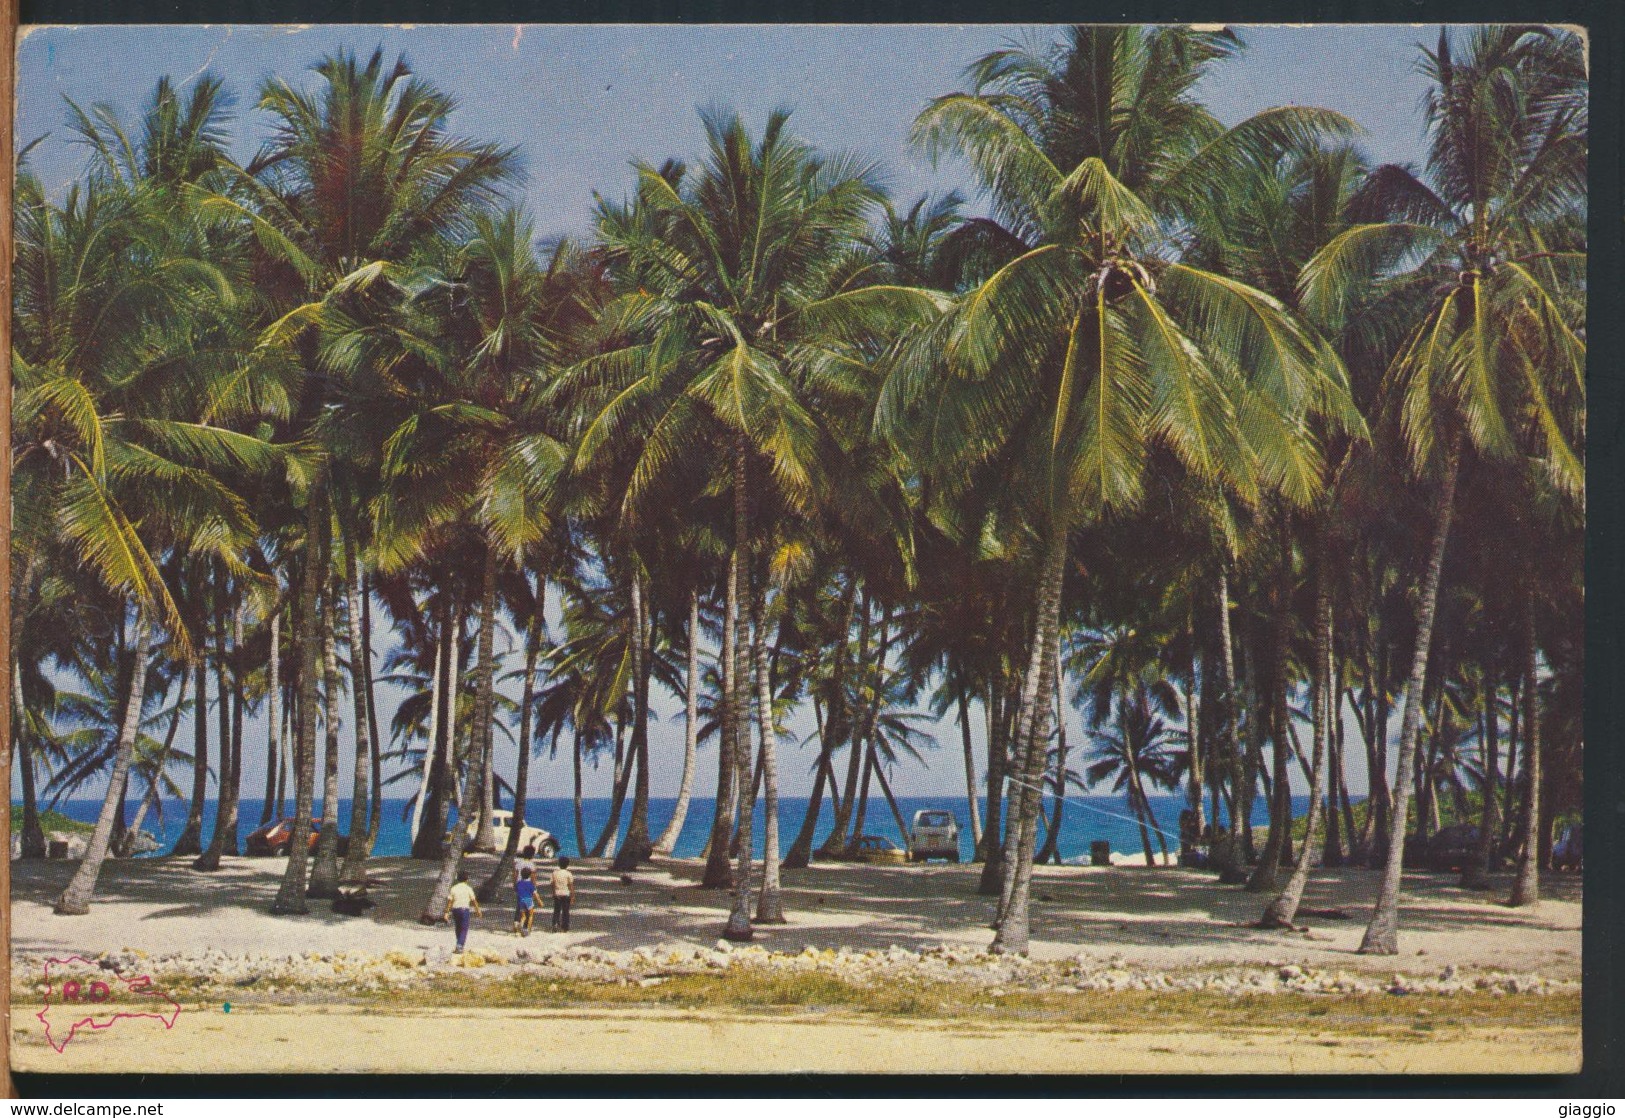 °°° 12192 - REPUBBLICA DOMINICANA - COCOTEROS EN PLAYA CARIBE - 1986 With Stamps °°° - Repubblica Dominicana